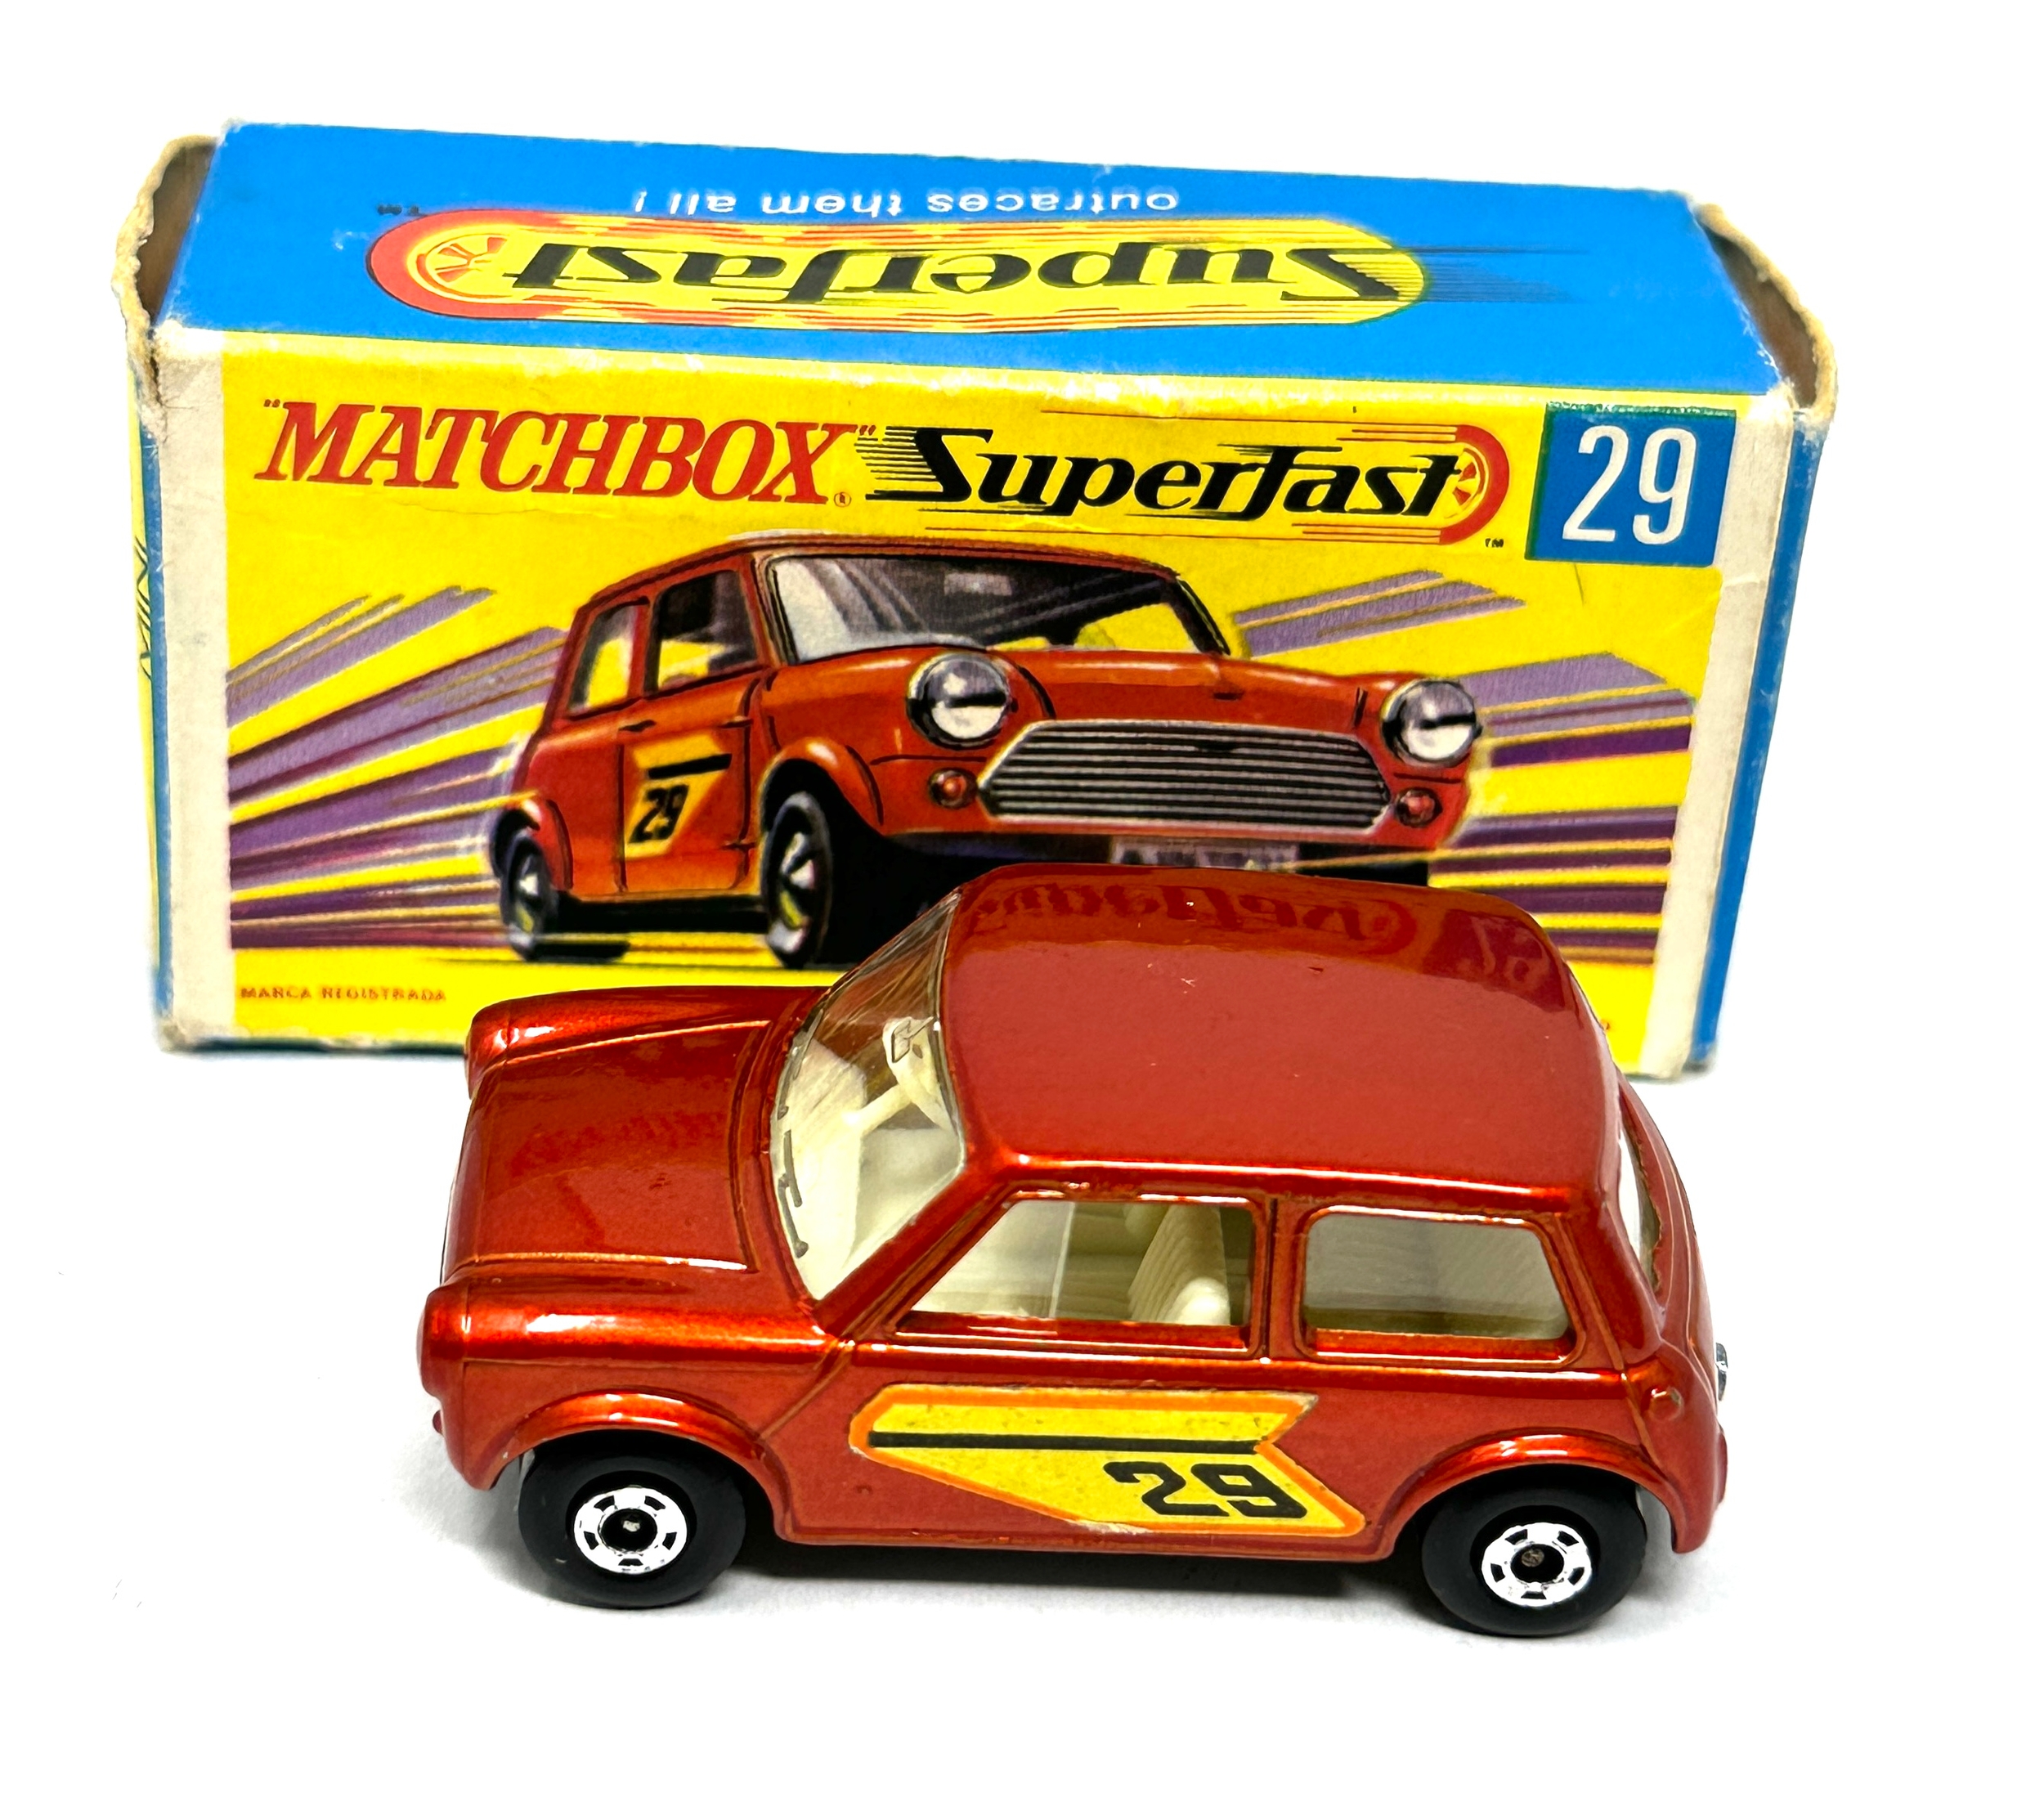 Lesney Matchbox Superfast 29 racing mini original boxed condition